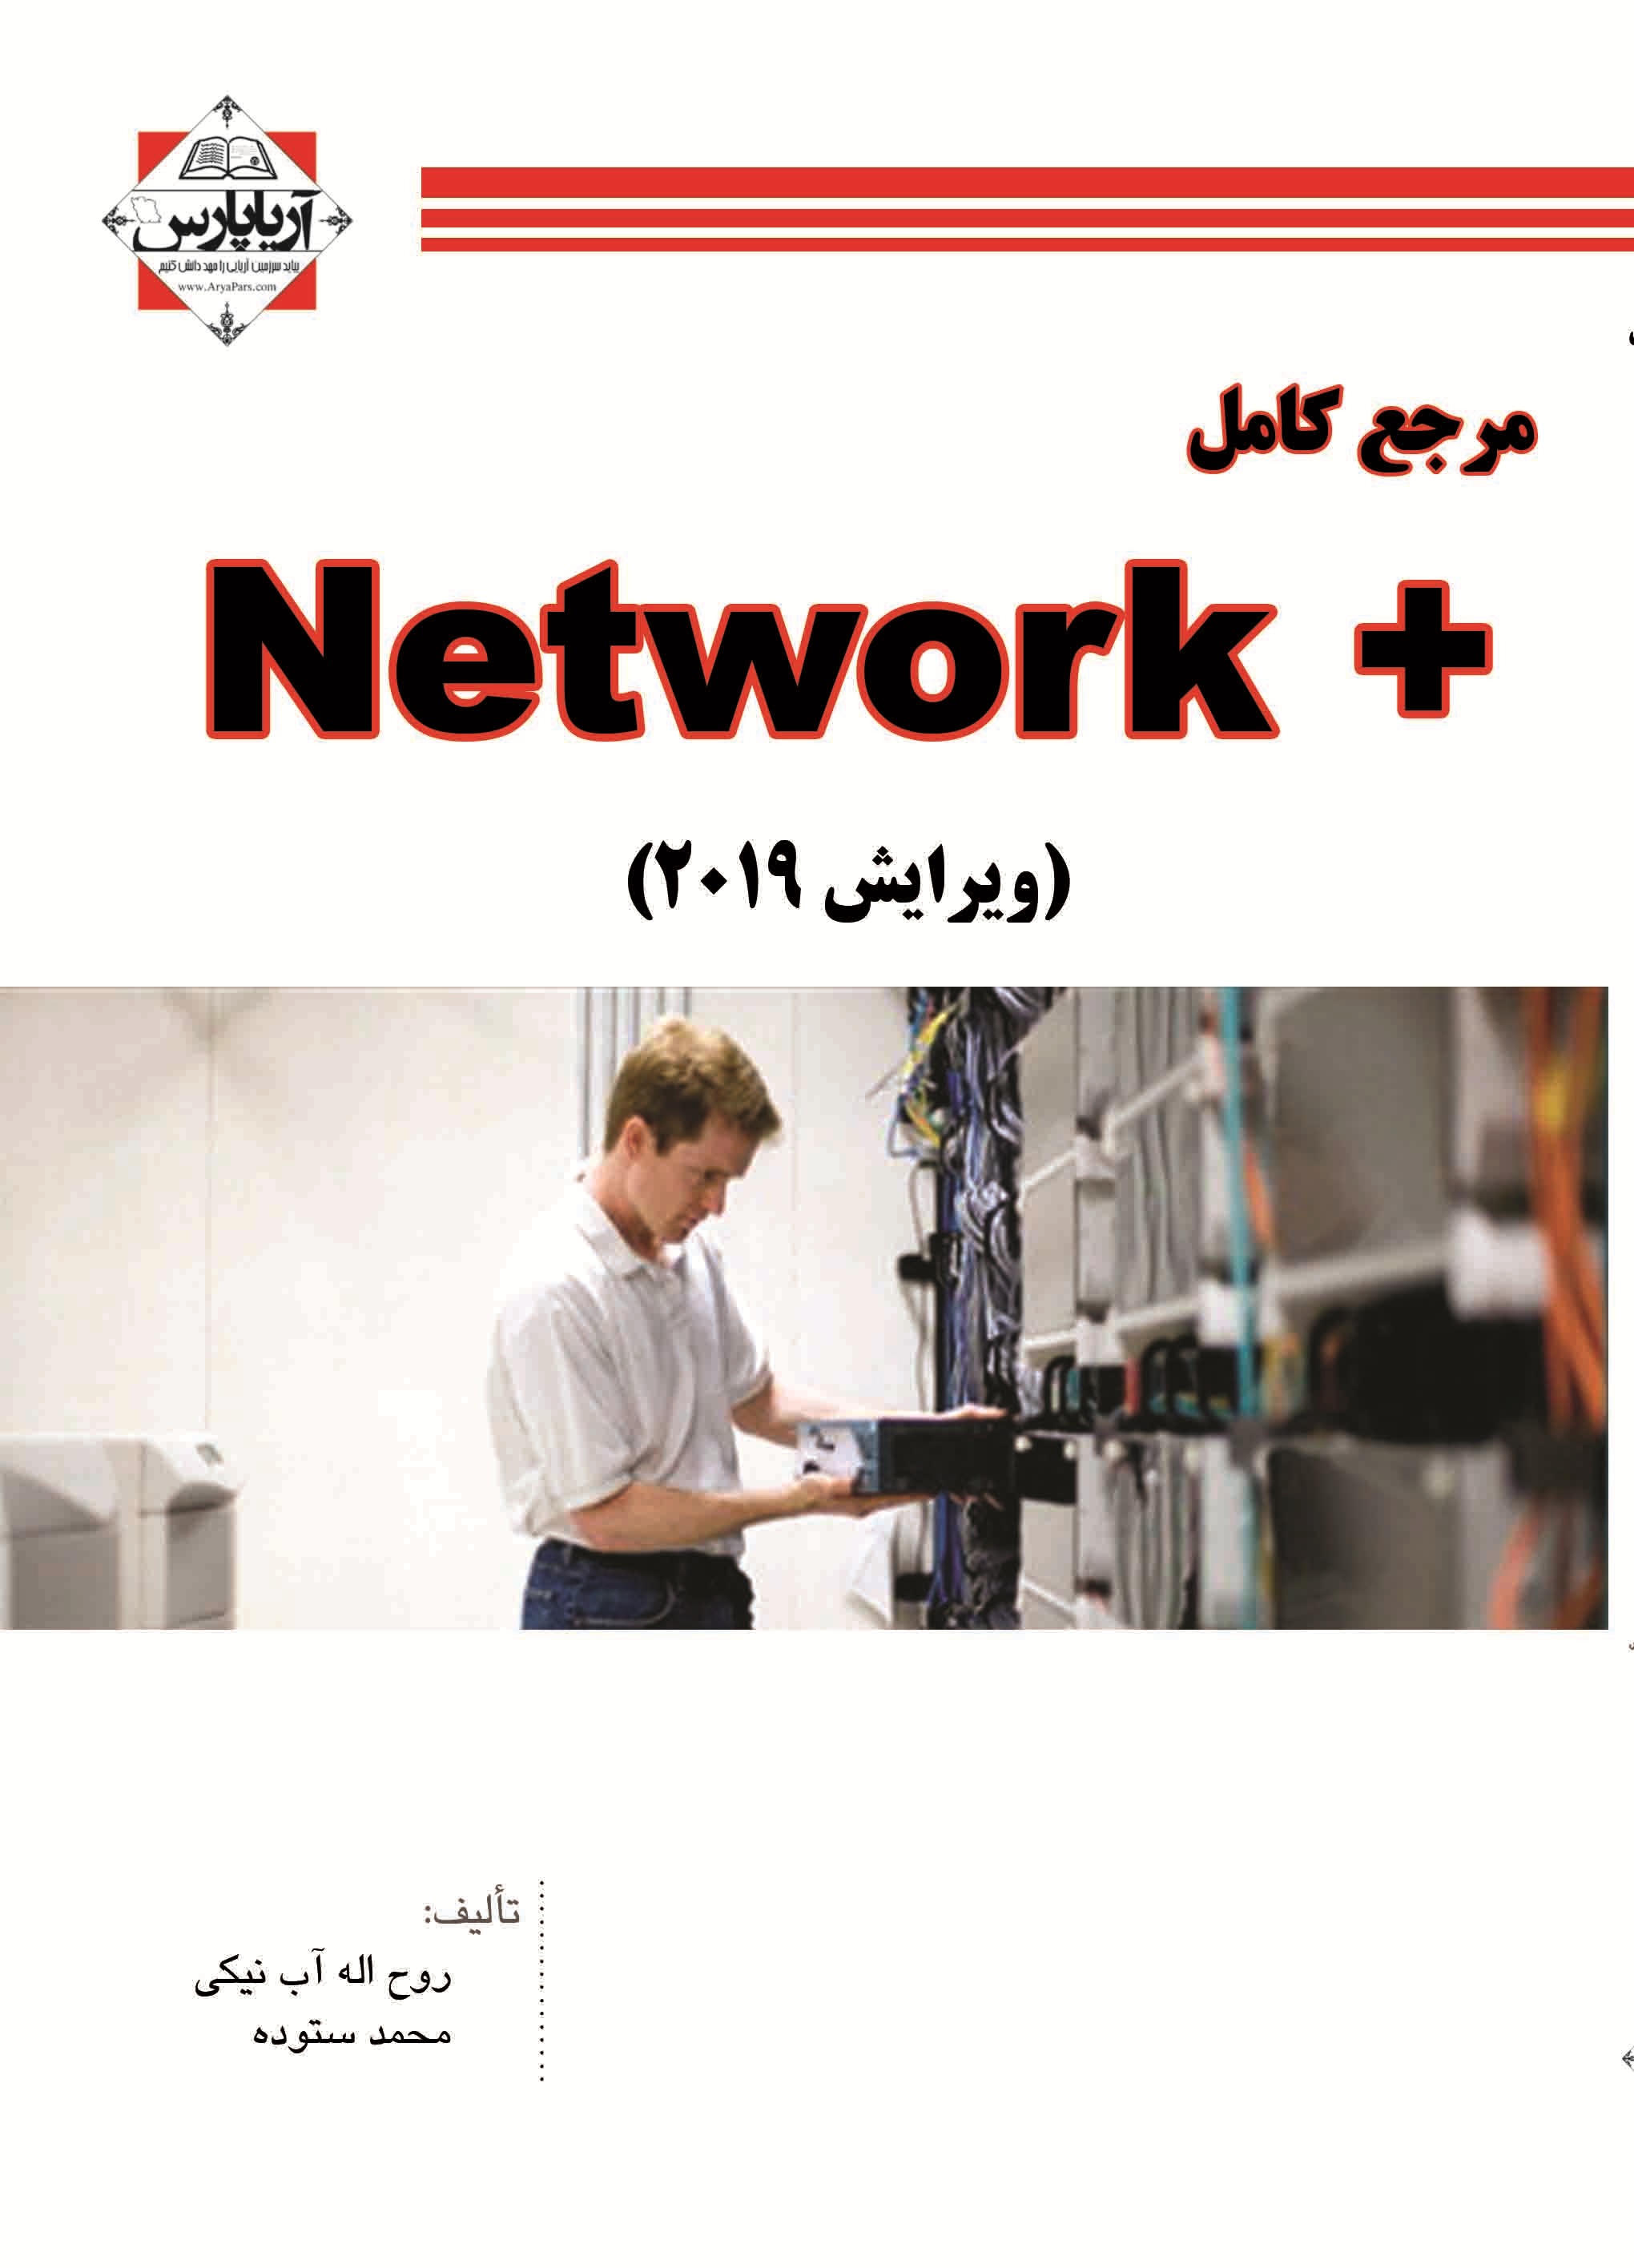 NetworkPlus-1